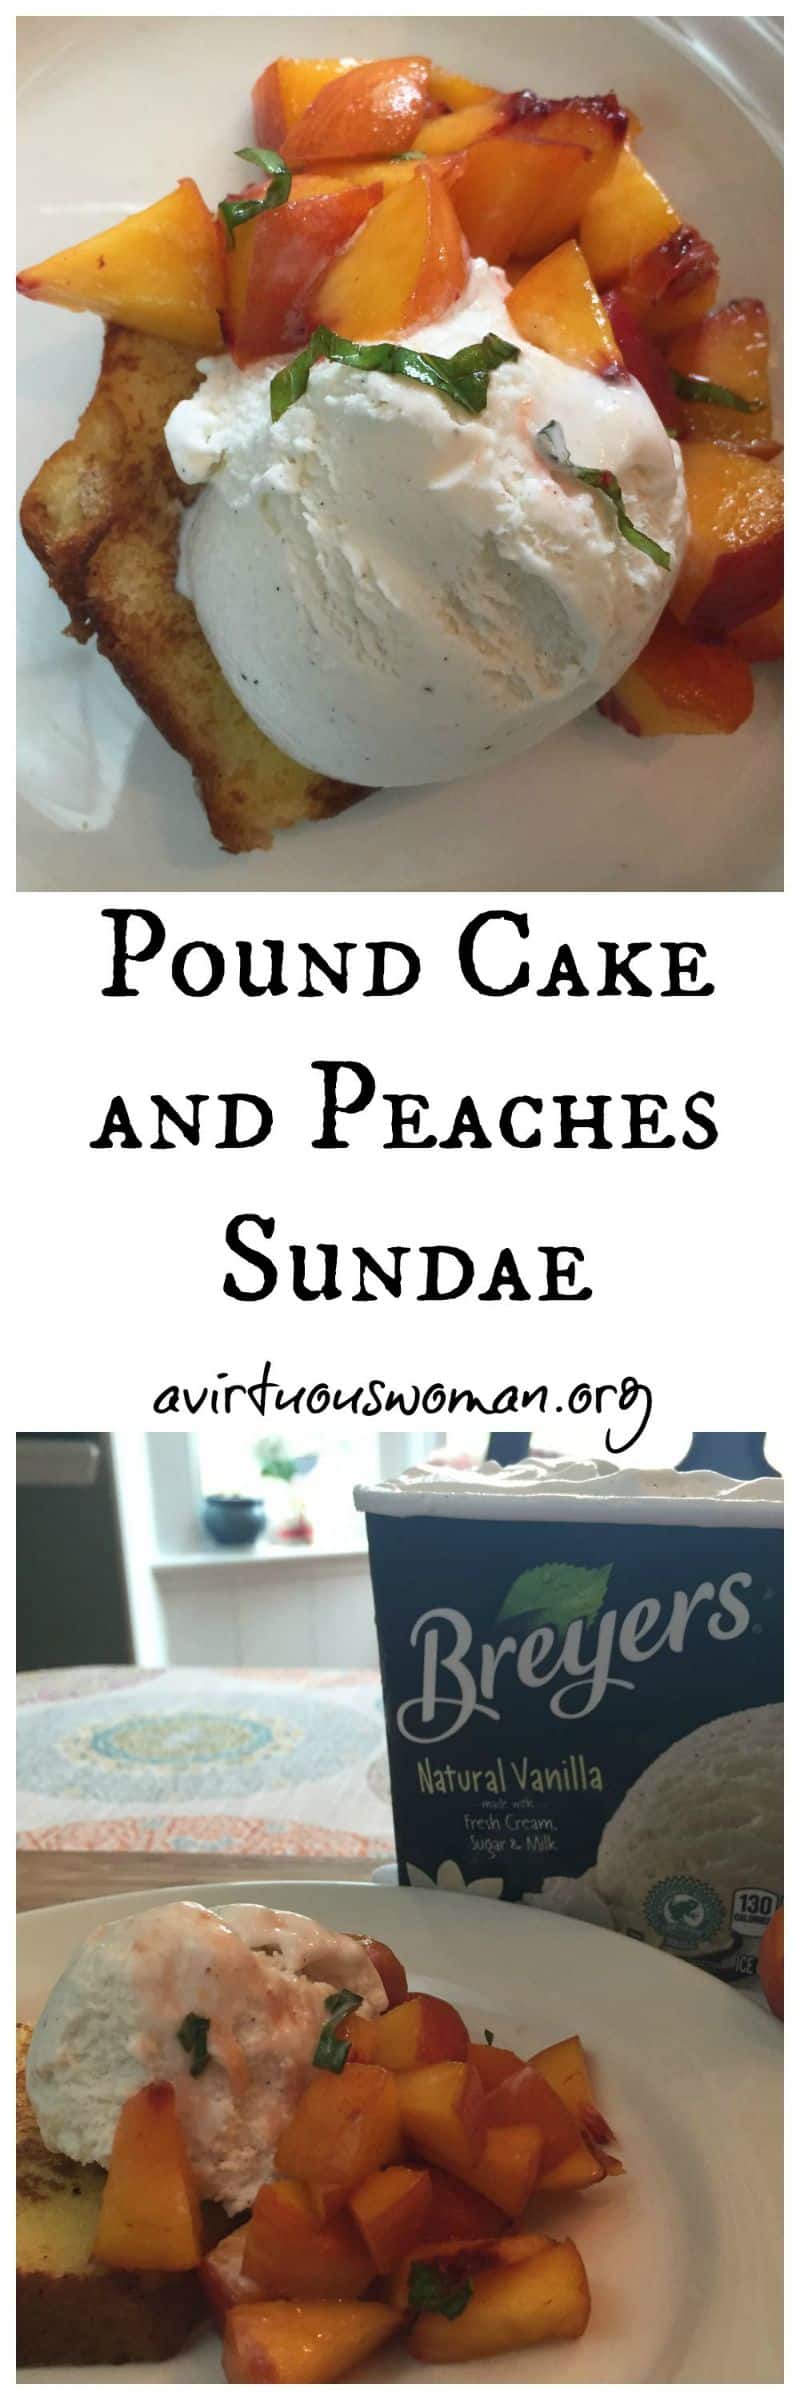 Pound Cake and Peaches Sundae @ AVirtuousWoman.org